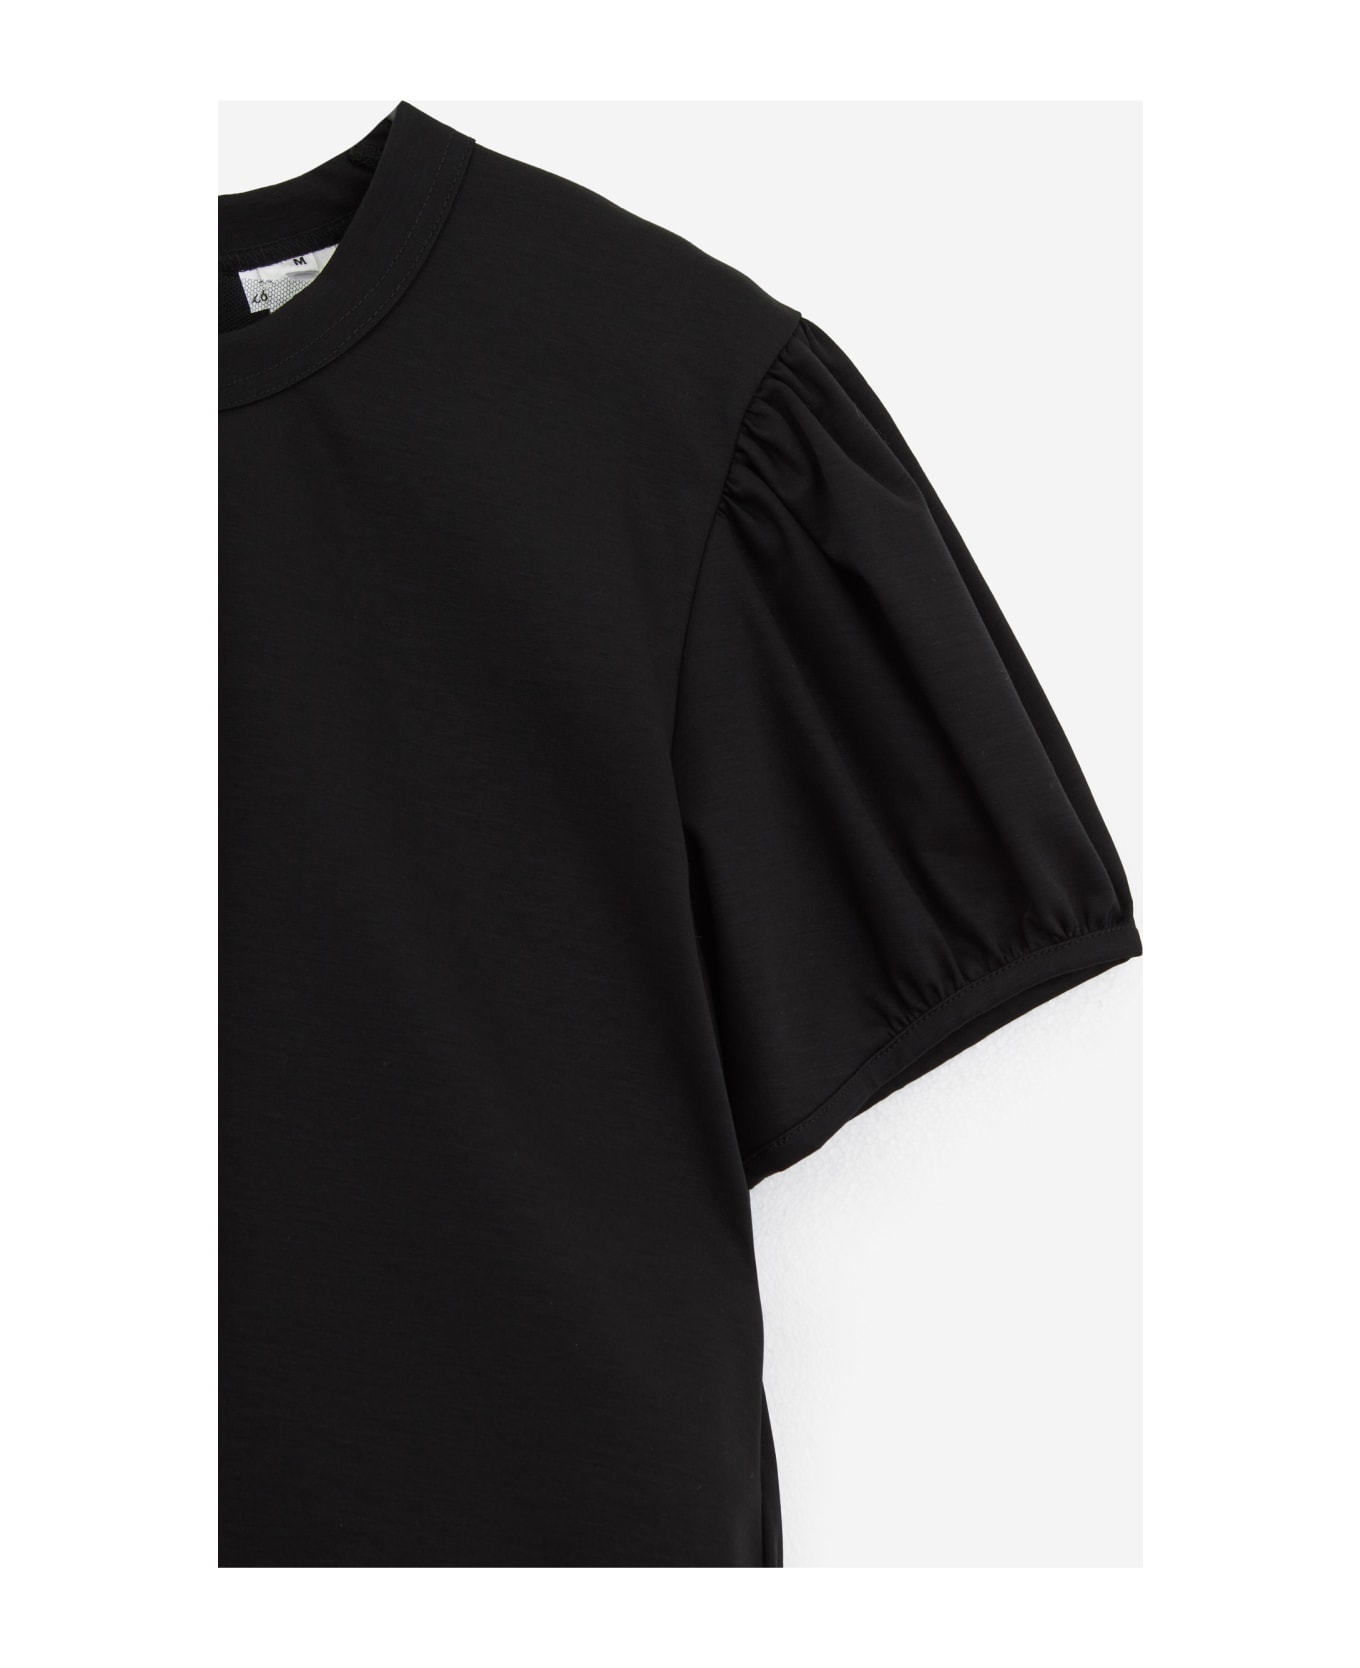 Comme des Garçons Noir Kei Ninomiya T-shirt - black Tシャツ